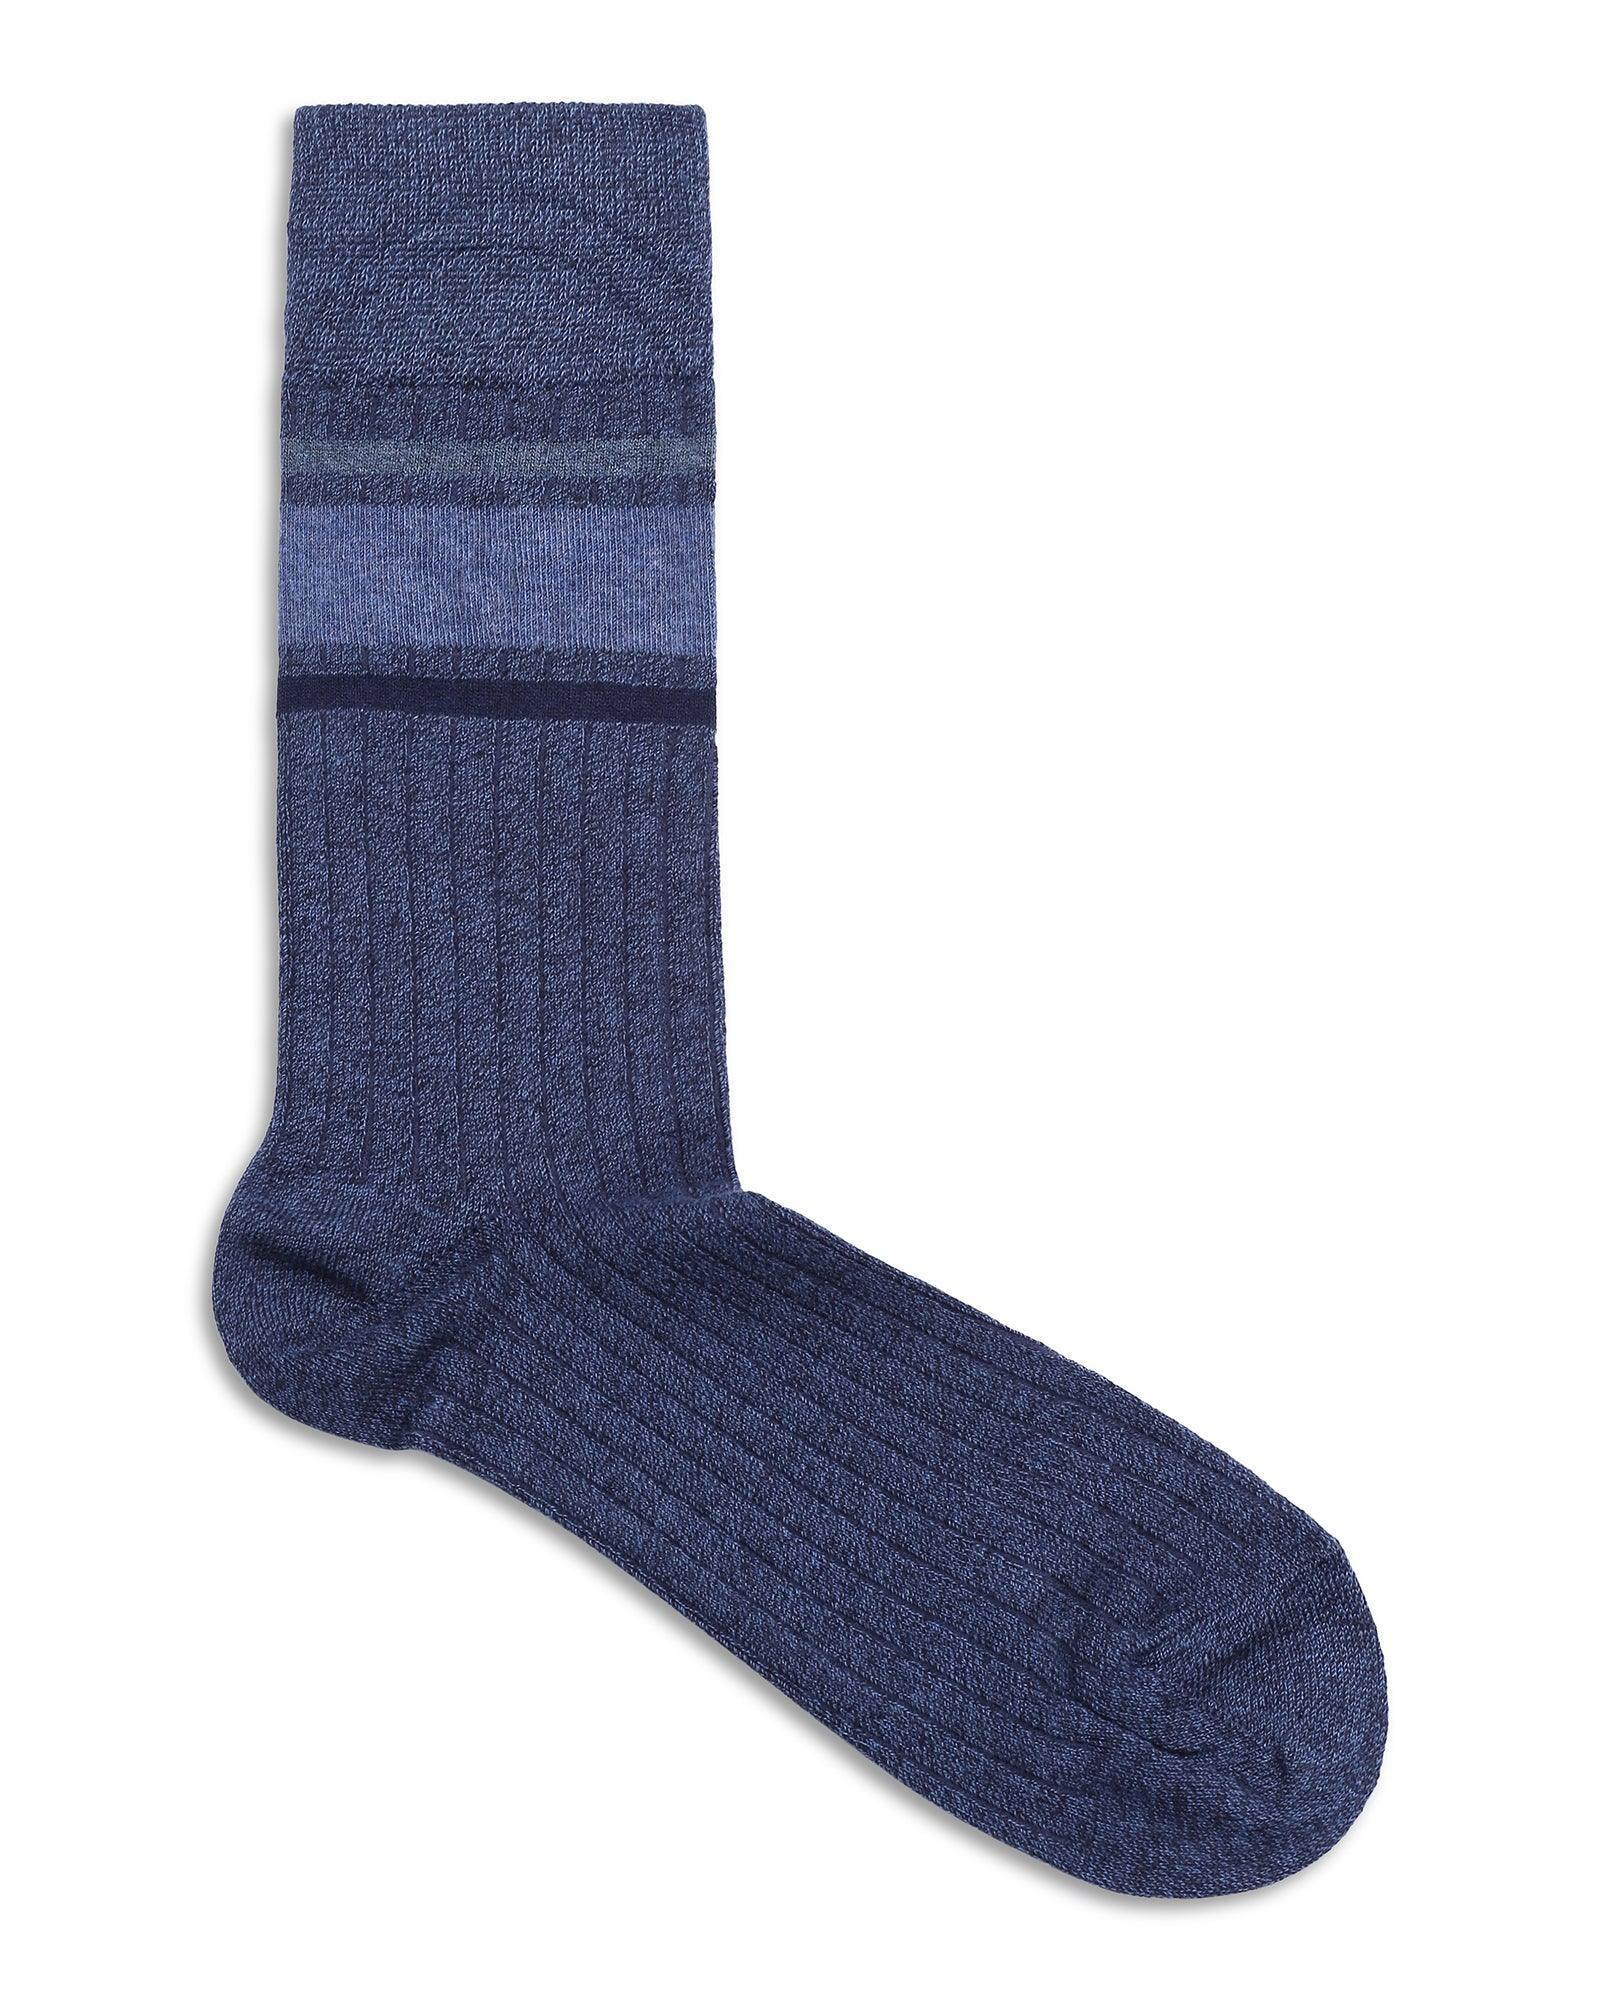 Cotton Navy Printed Socks - Promp